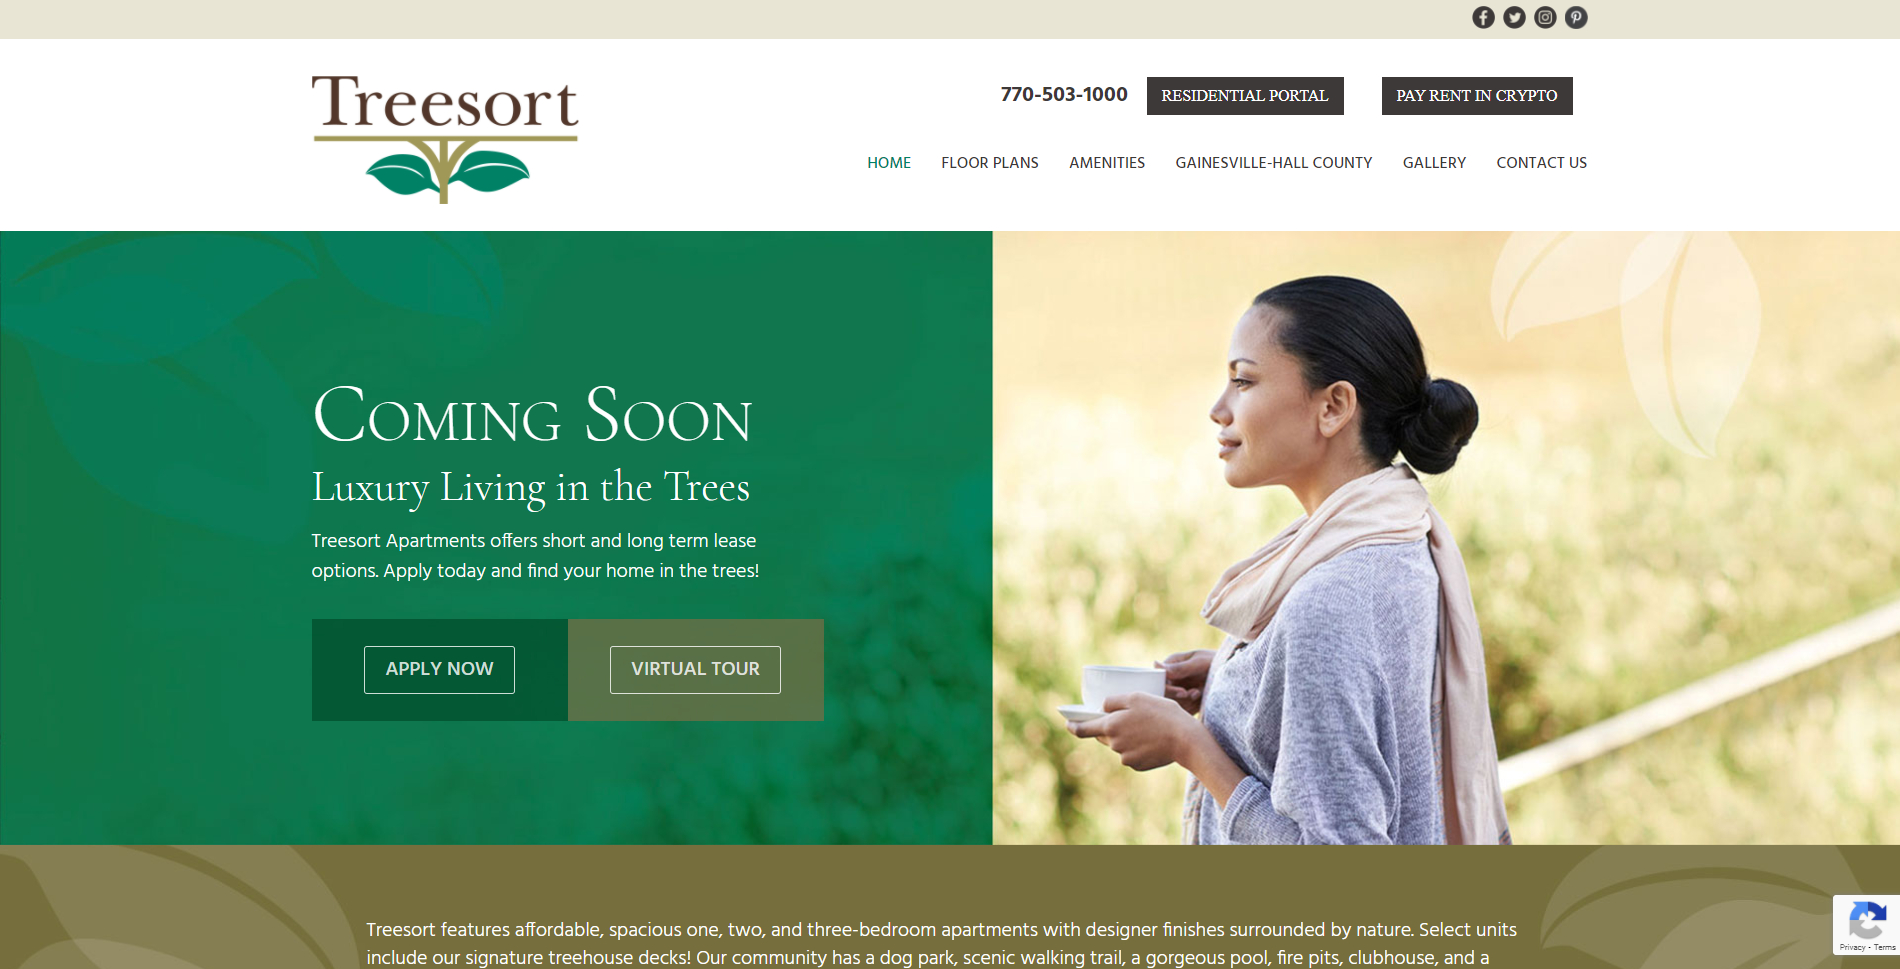 Treesort - Home Page